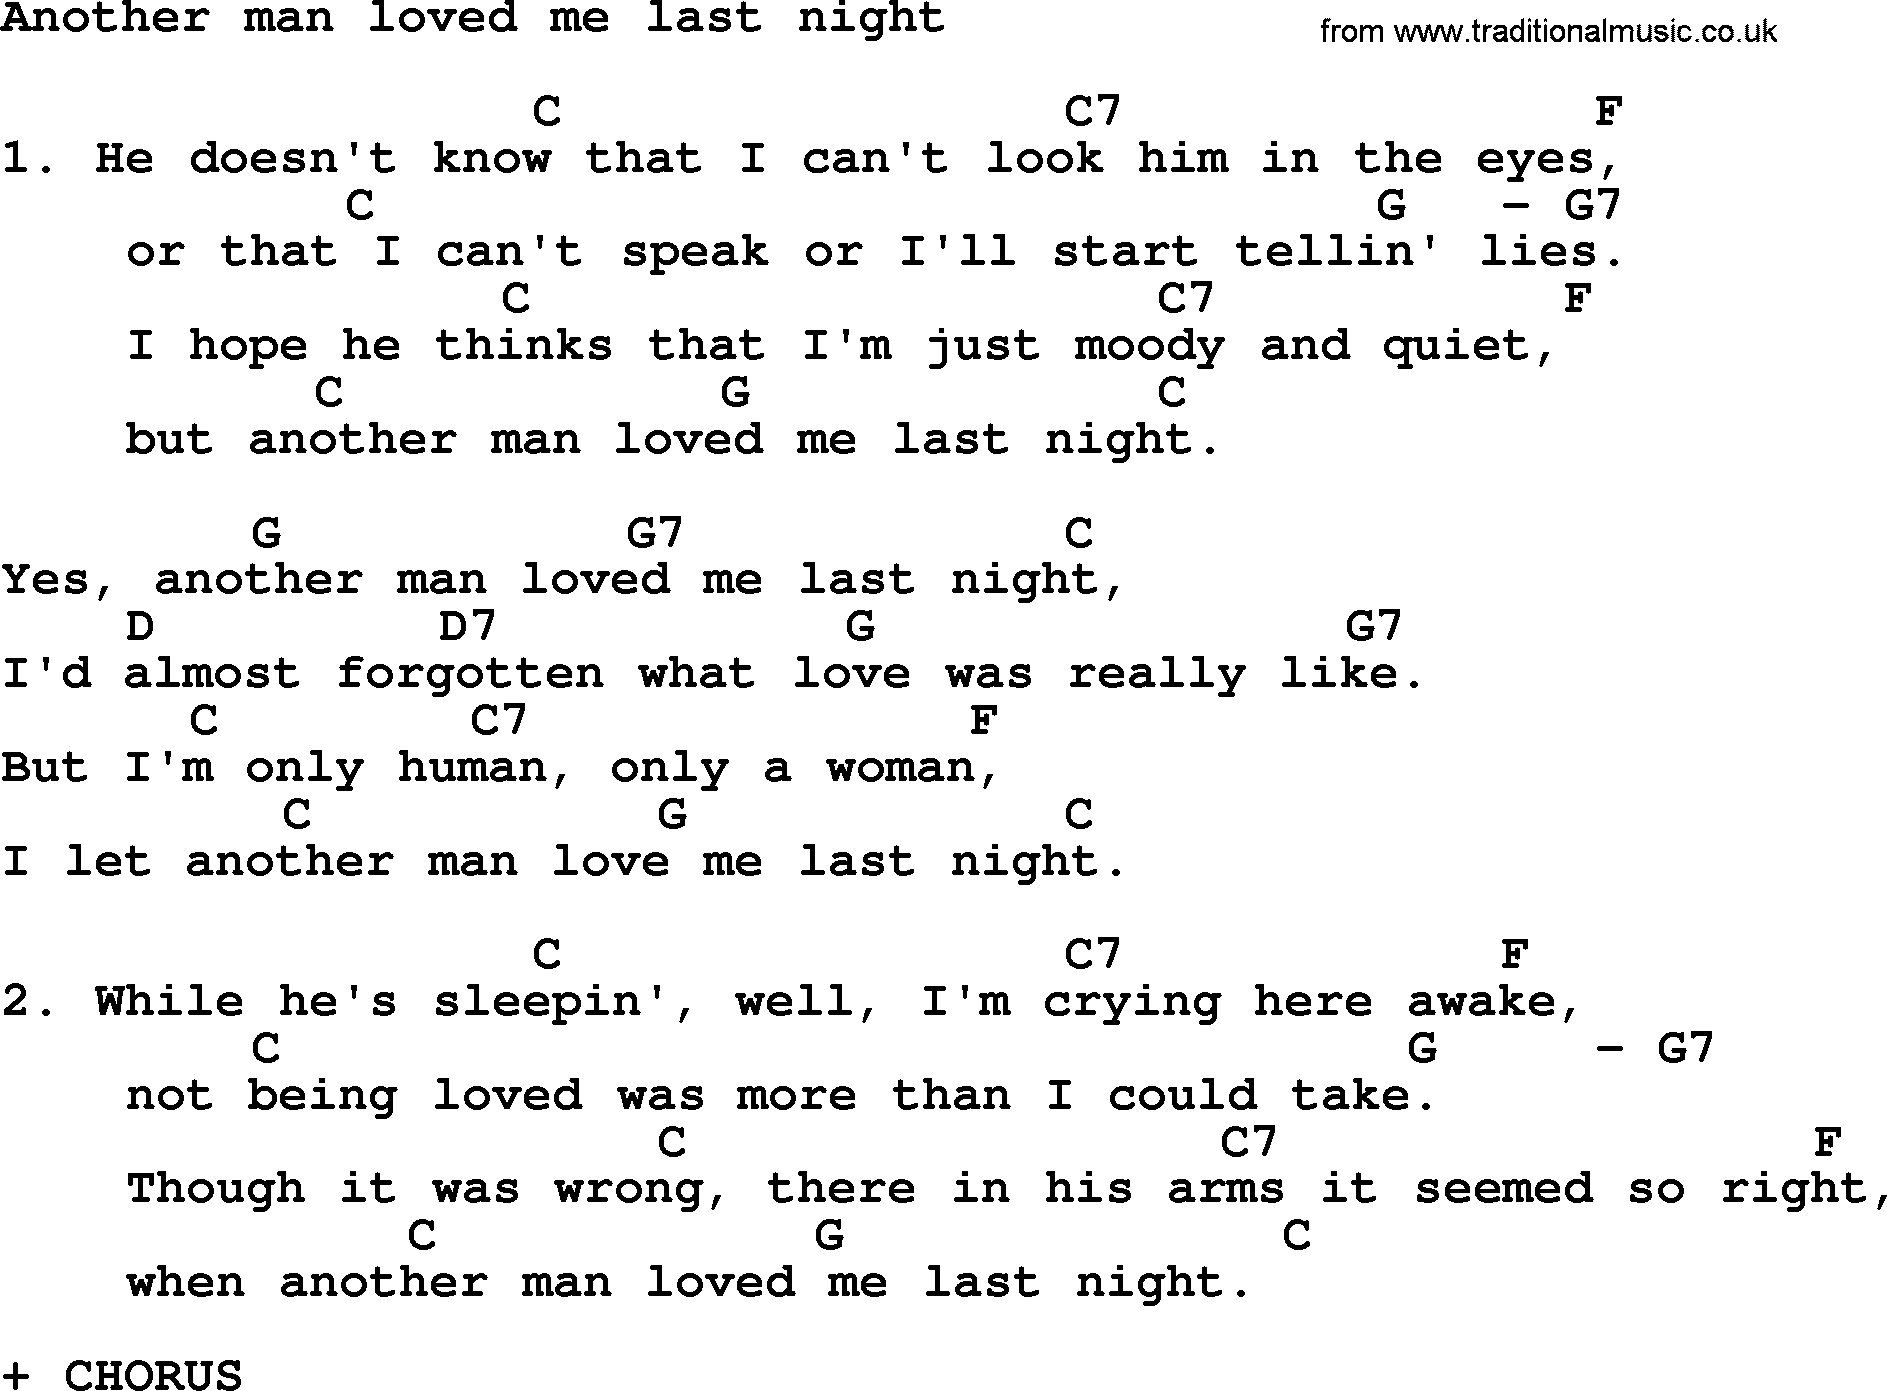 Loretta Lynn song: Another Man Loved Me Last Night lyrics and chords